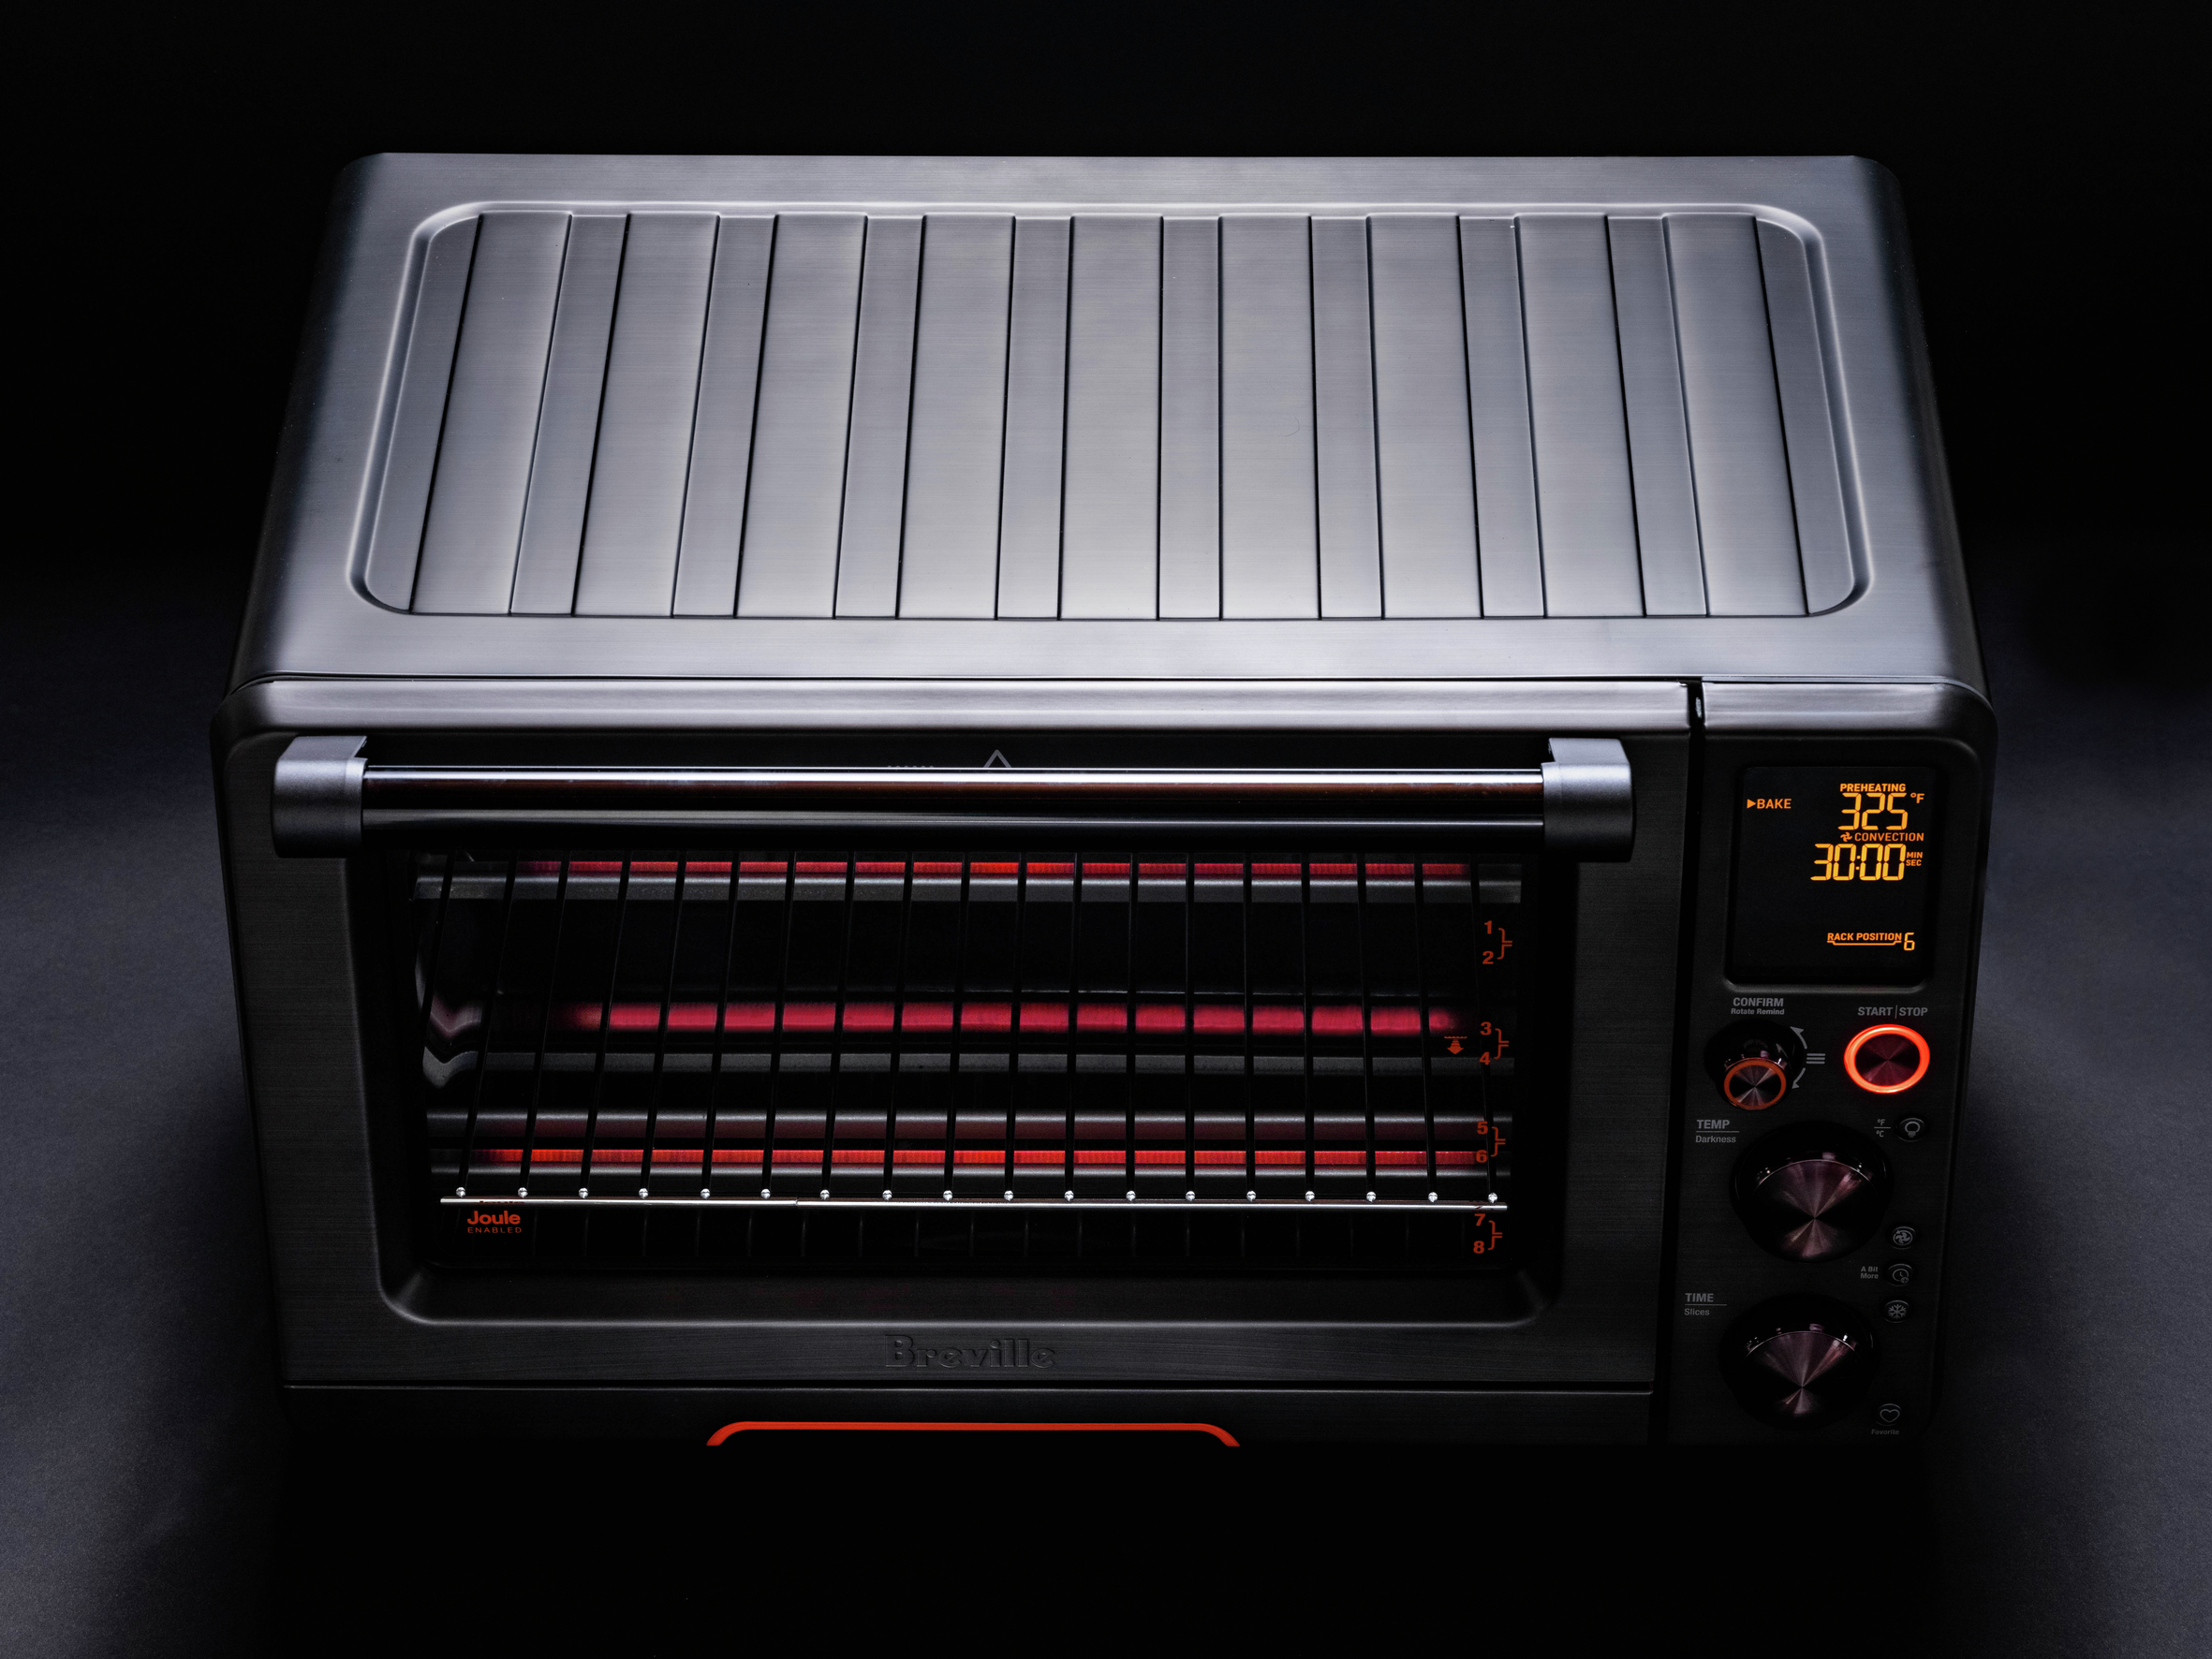 Breville Smart Oven Pro on sale for $64 off on